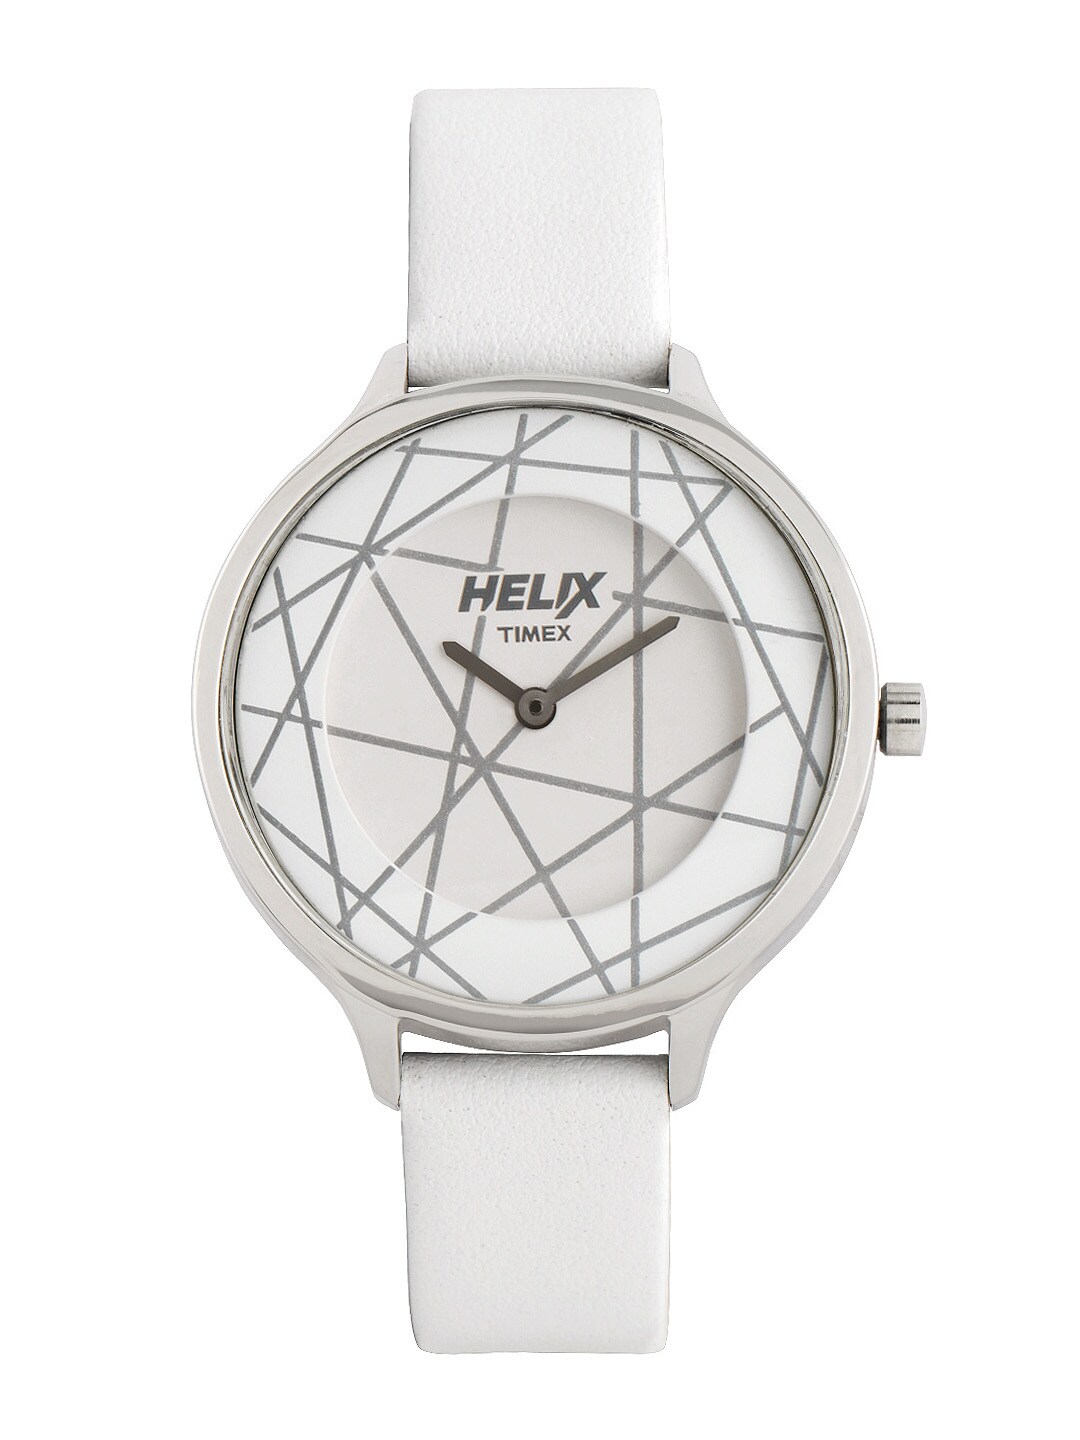 Timex Helix Women White Dial Watch